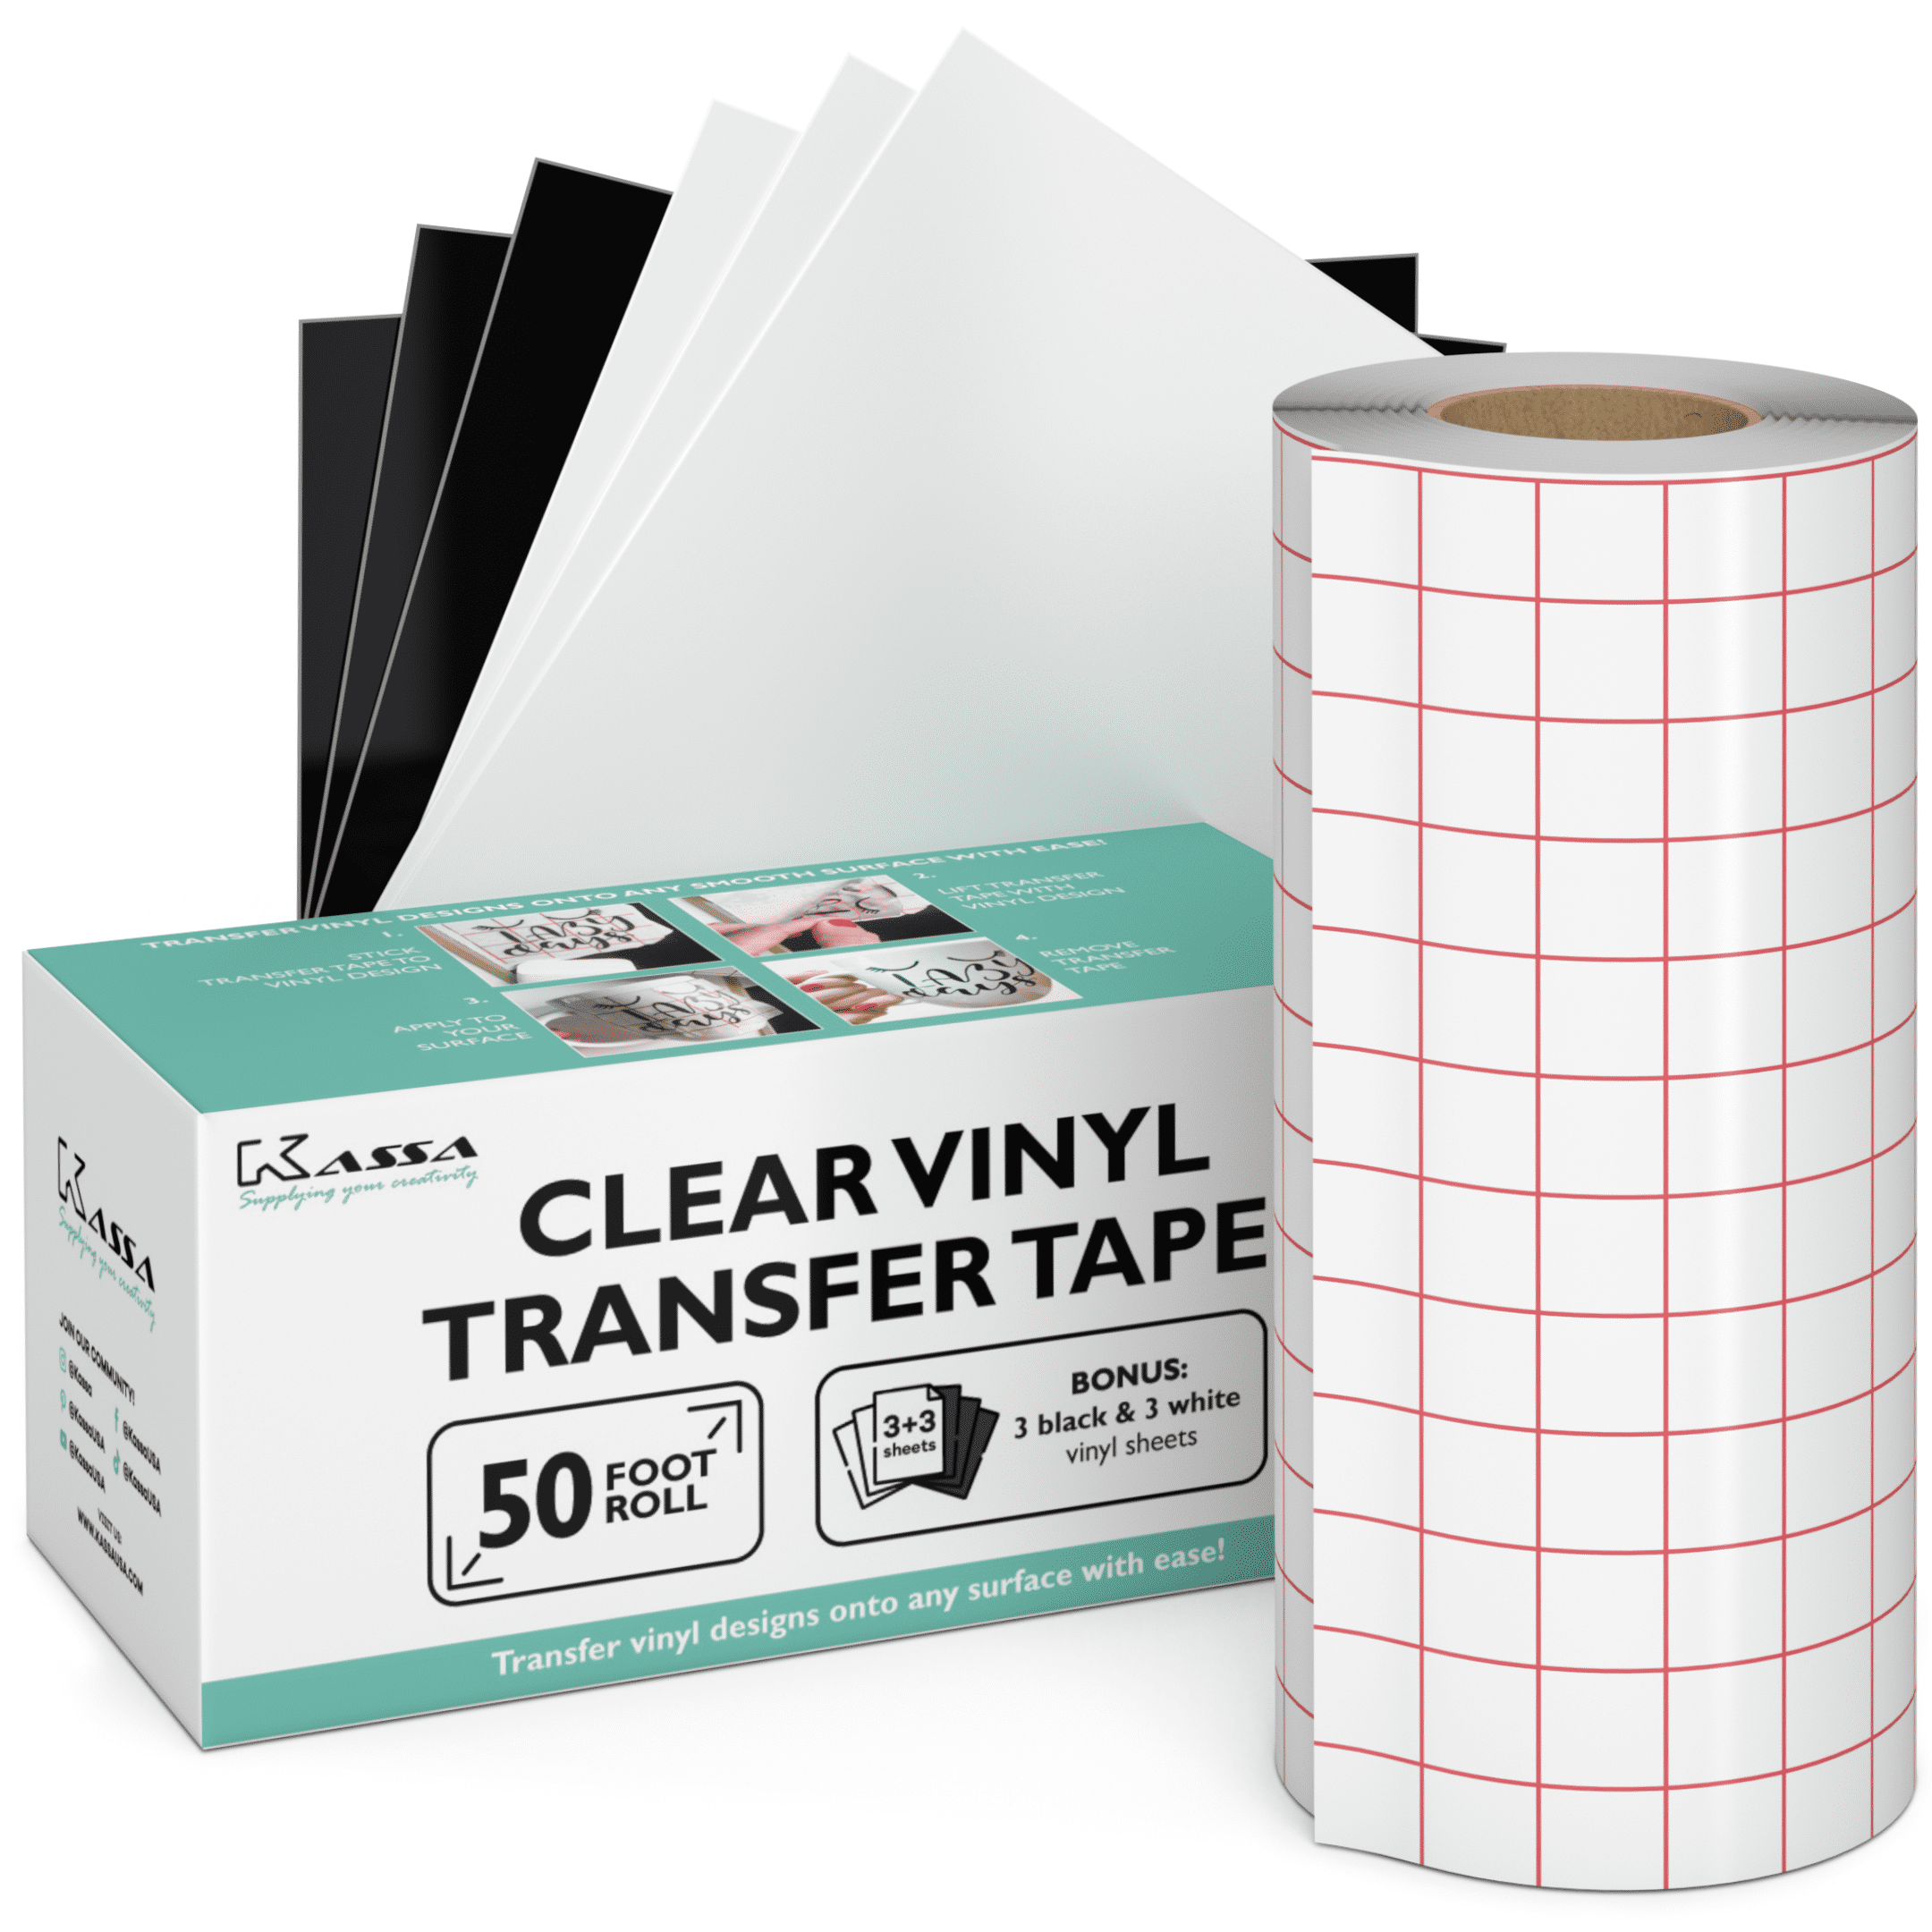 Kassa Vinyl Transfer Tape Roll is 6 x 50 feet, 3 Black and 3